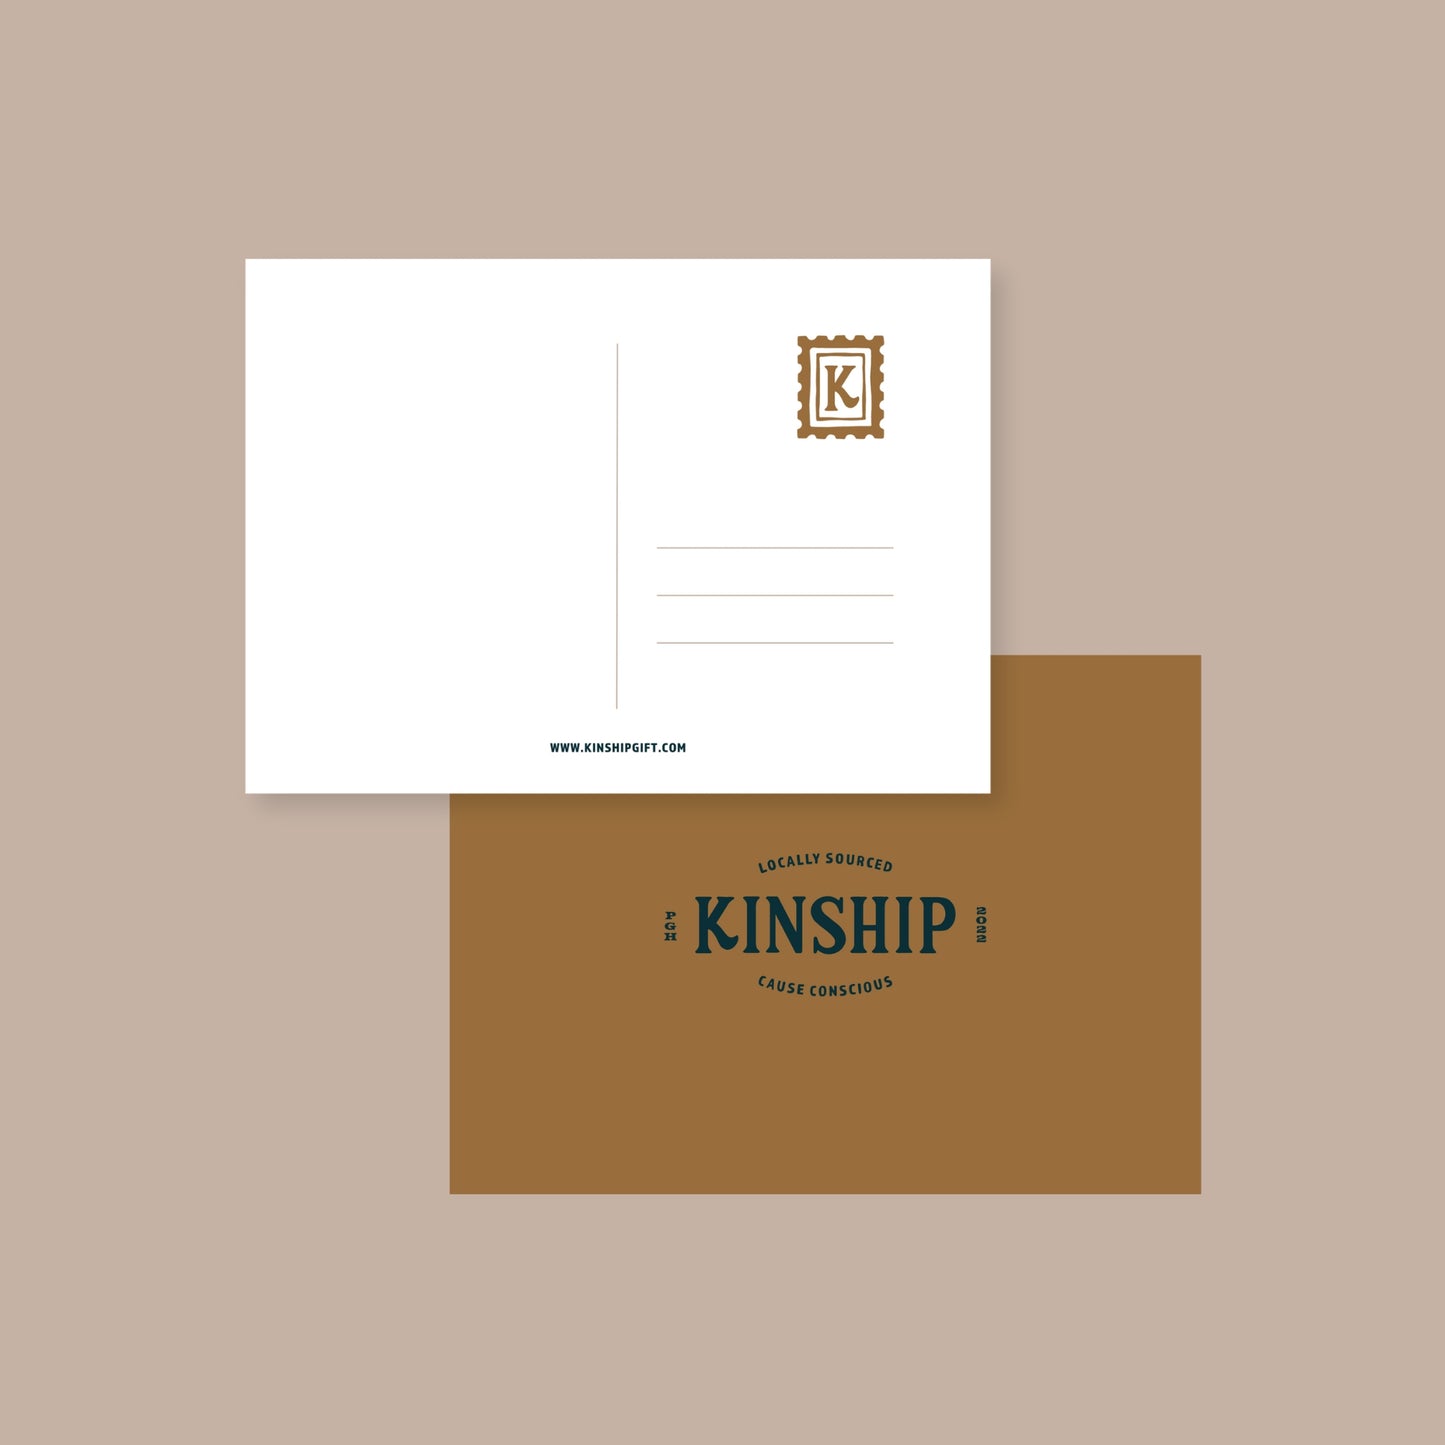 Kinship Cards - Easy Bundle - Bundle - KINSHIP GIFT - kinship gift, LDT:GW:RESTRICT - Pittsburgh - gift - boxes - gift - baskets - corporate - gifts - holiday - gifts